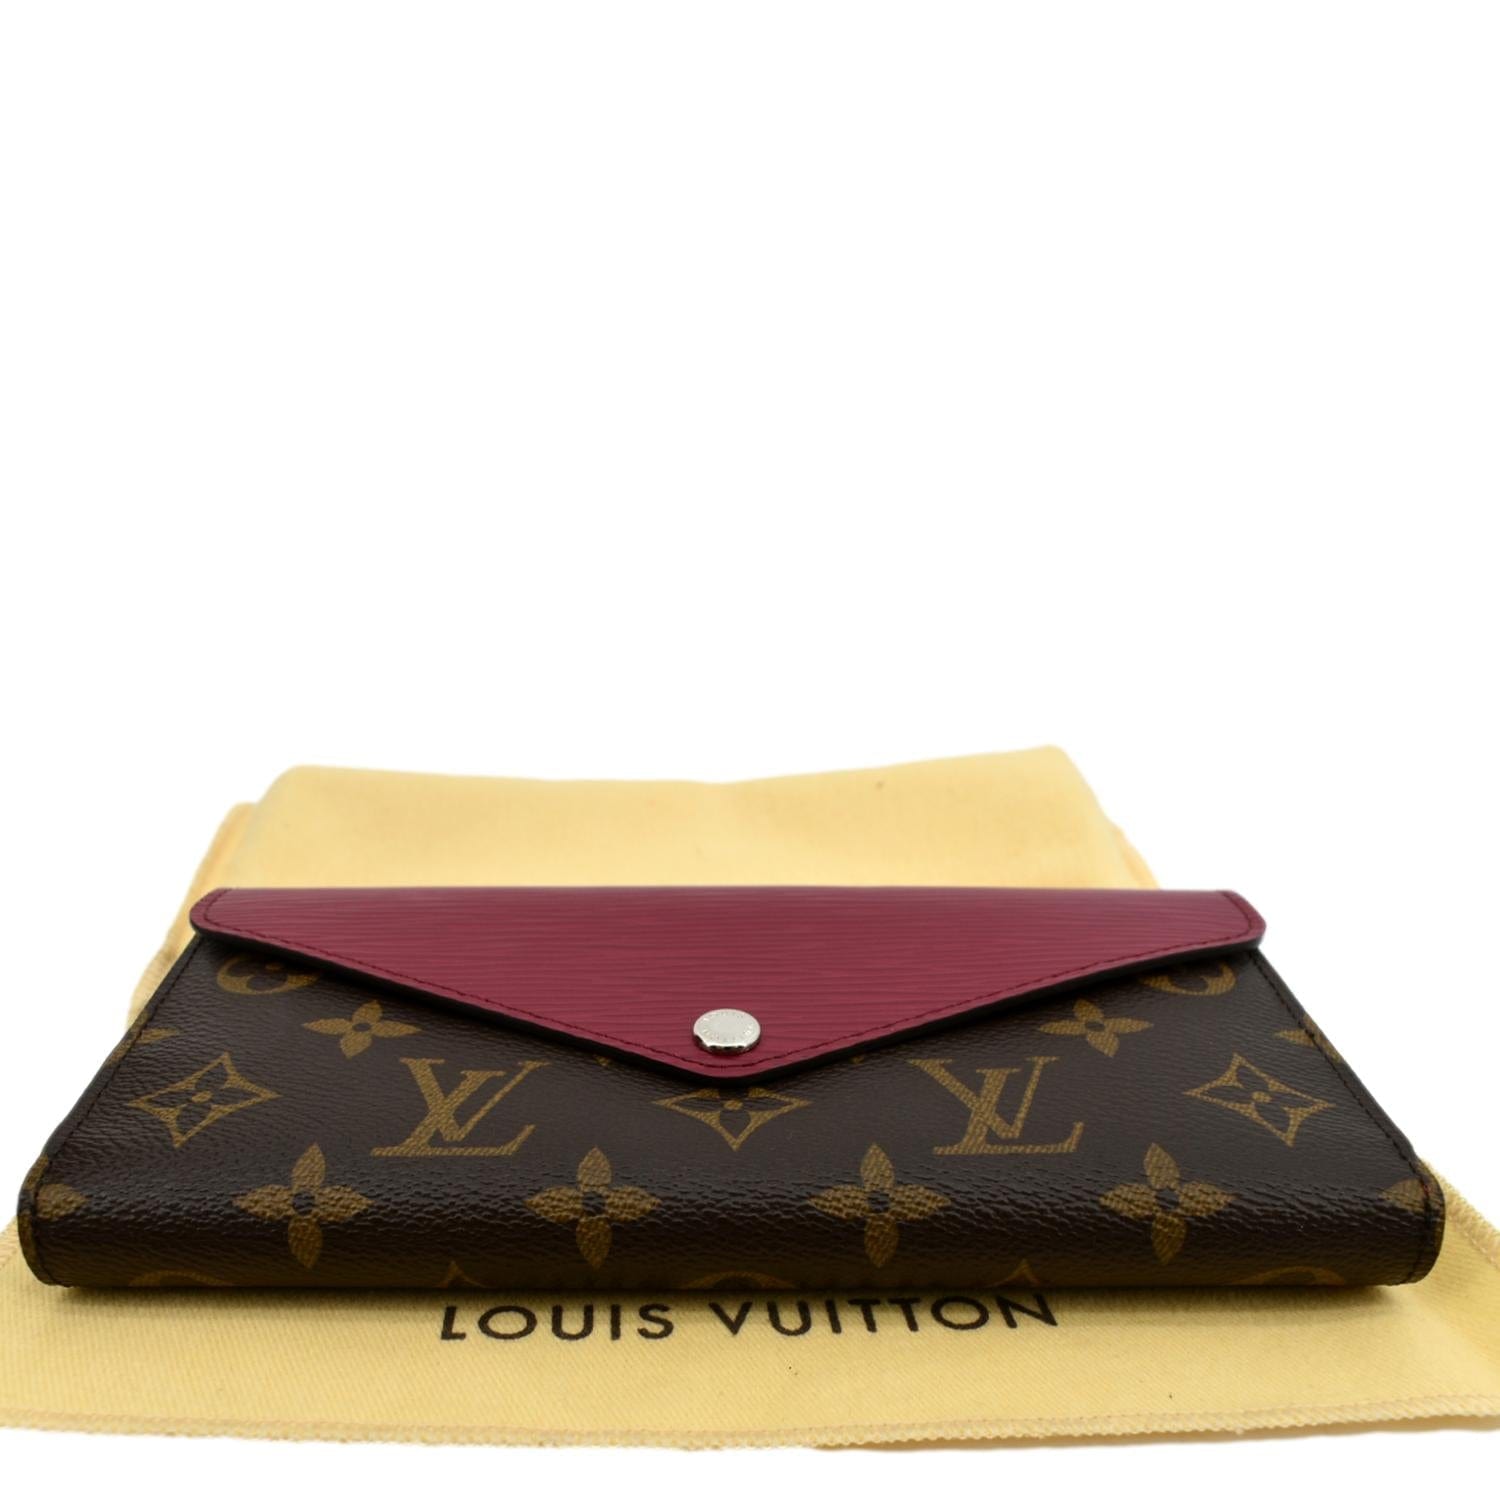 Louis Vuitton Marie-lou Long Wallet